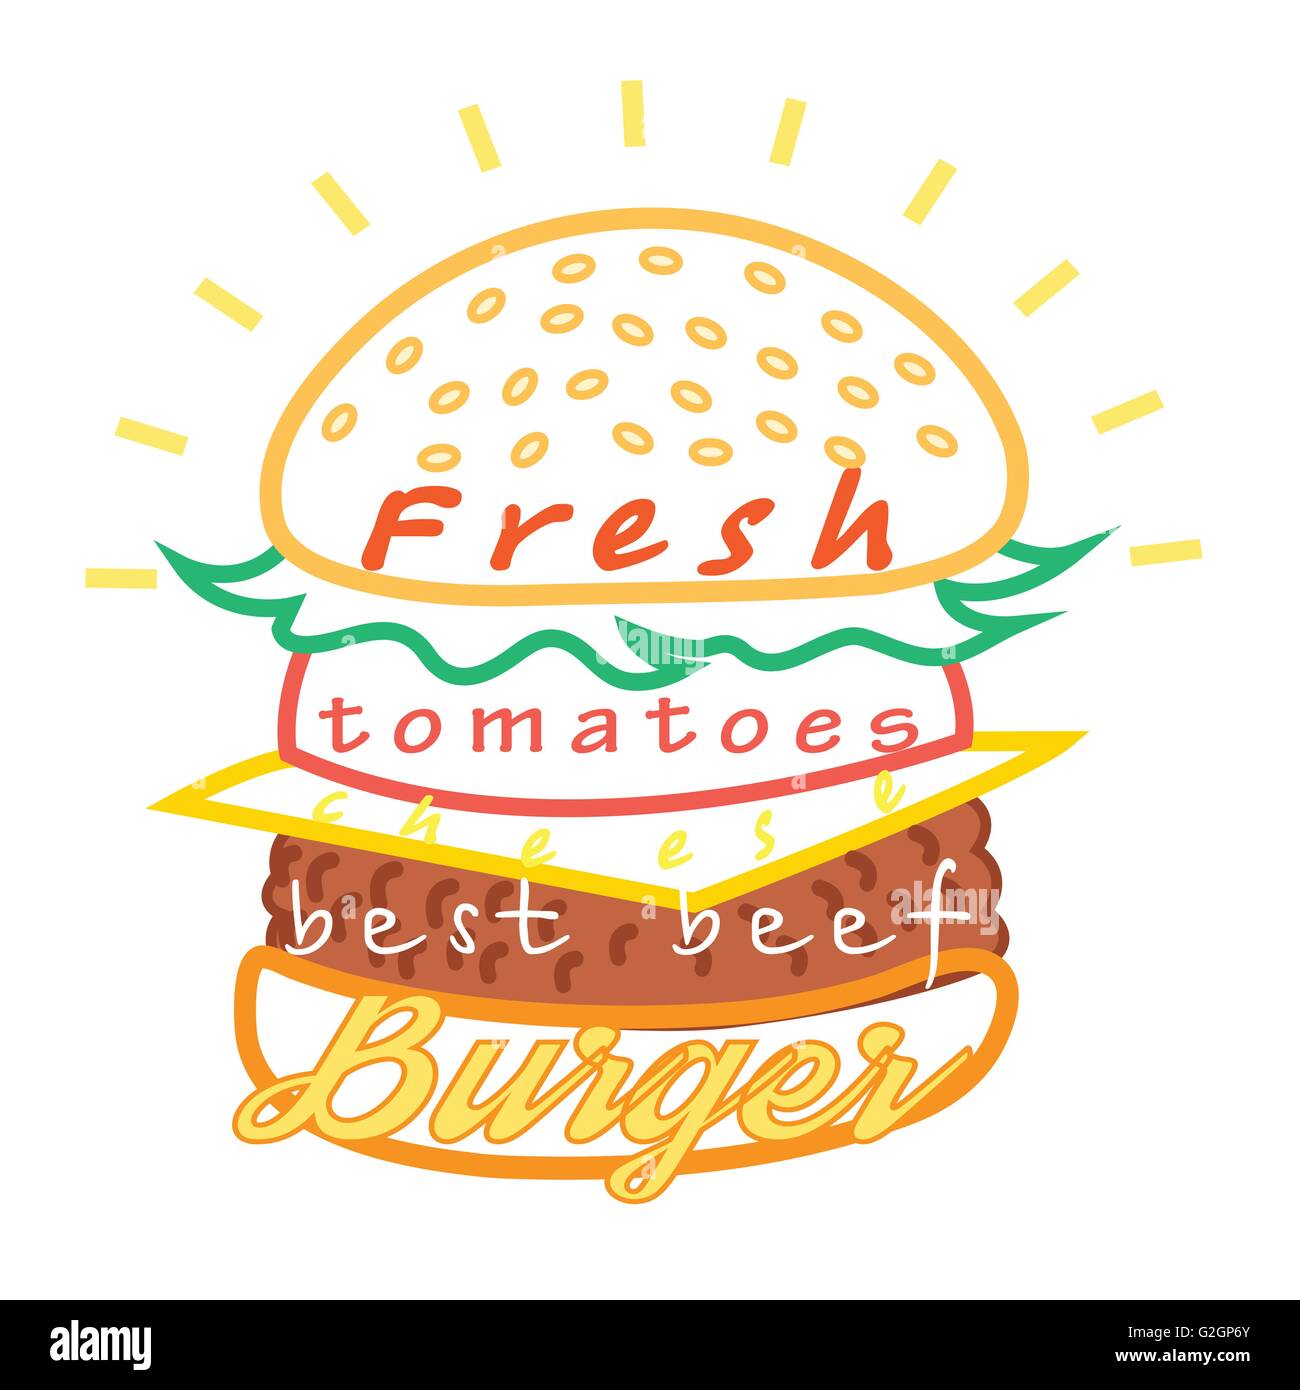 Beautiful vector illustration of a tasty Burger Stock Vector